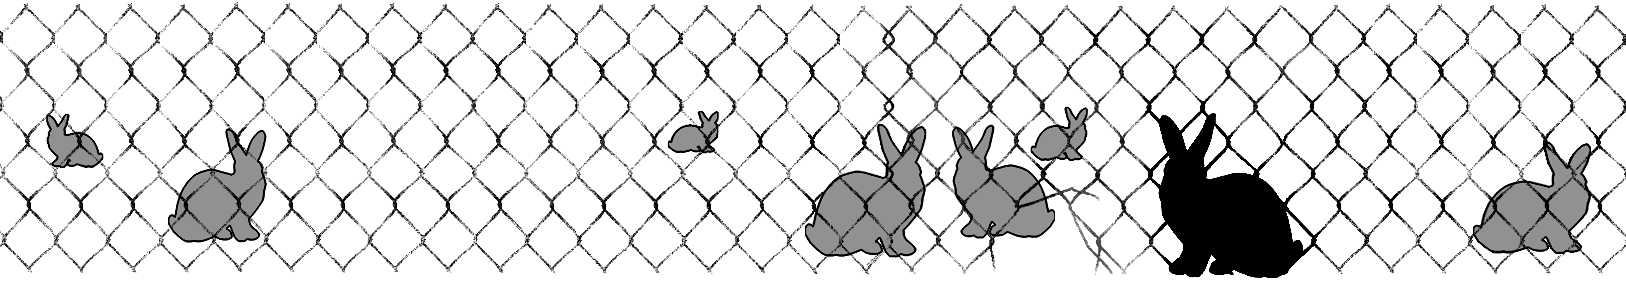 tplimg:blackrabbit:rabbitprooffence_web_16.gif